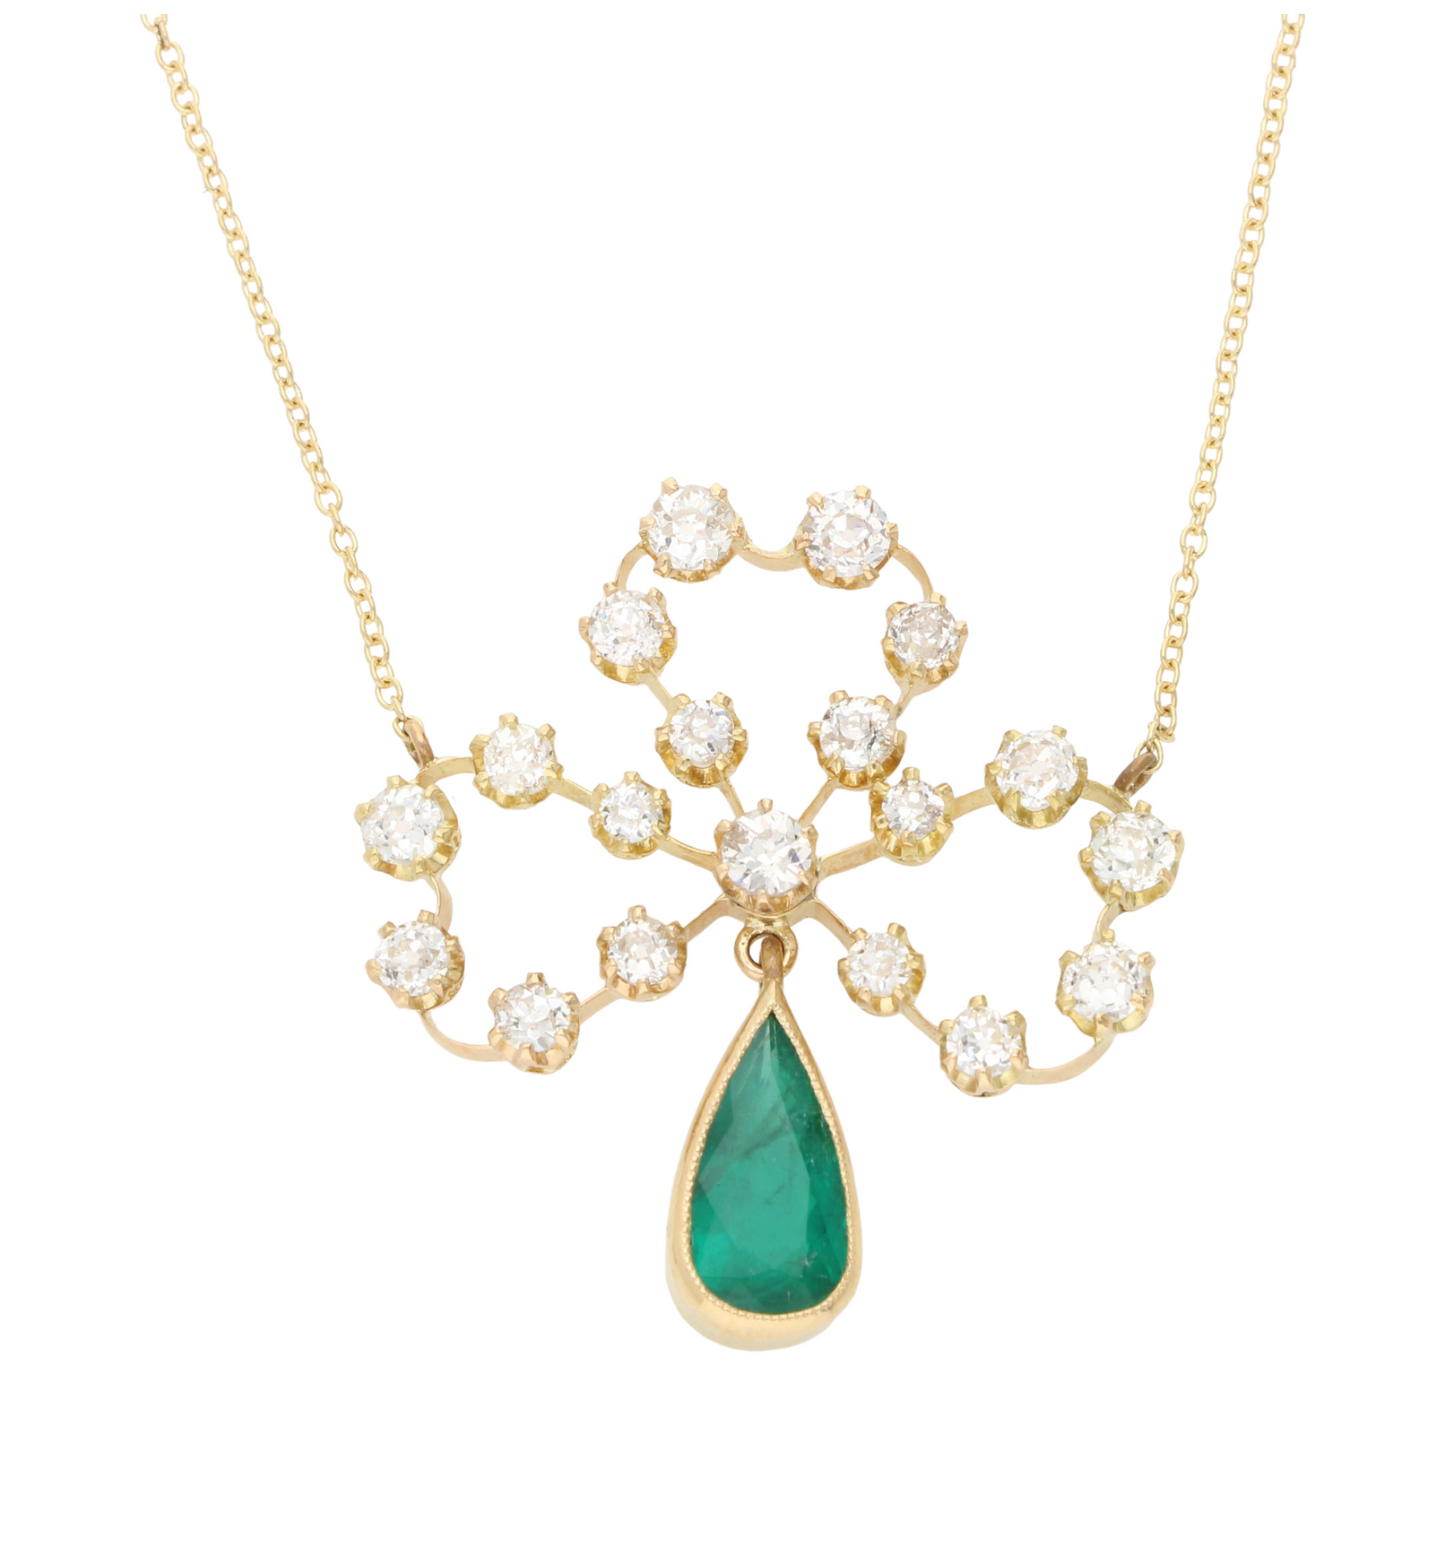 18ct emerald and old cut diamond shamrock pendant necklace